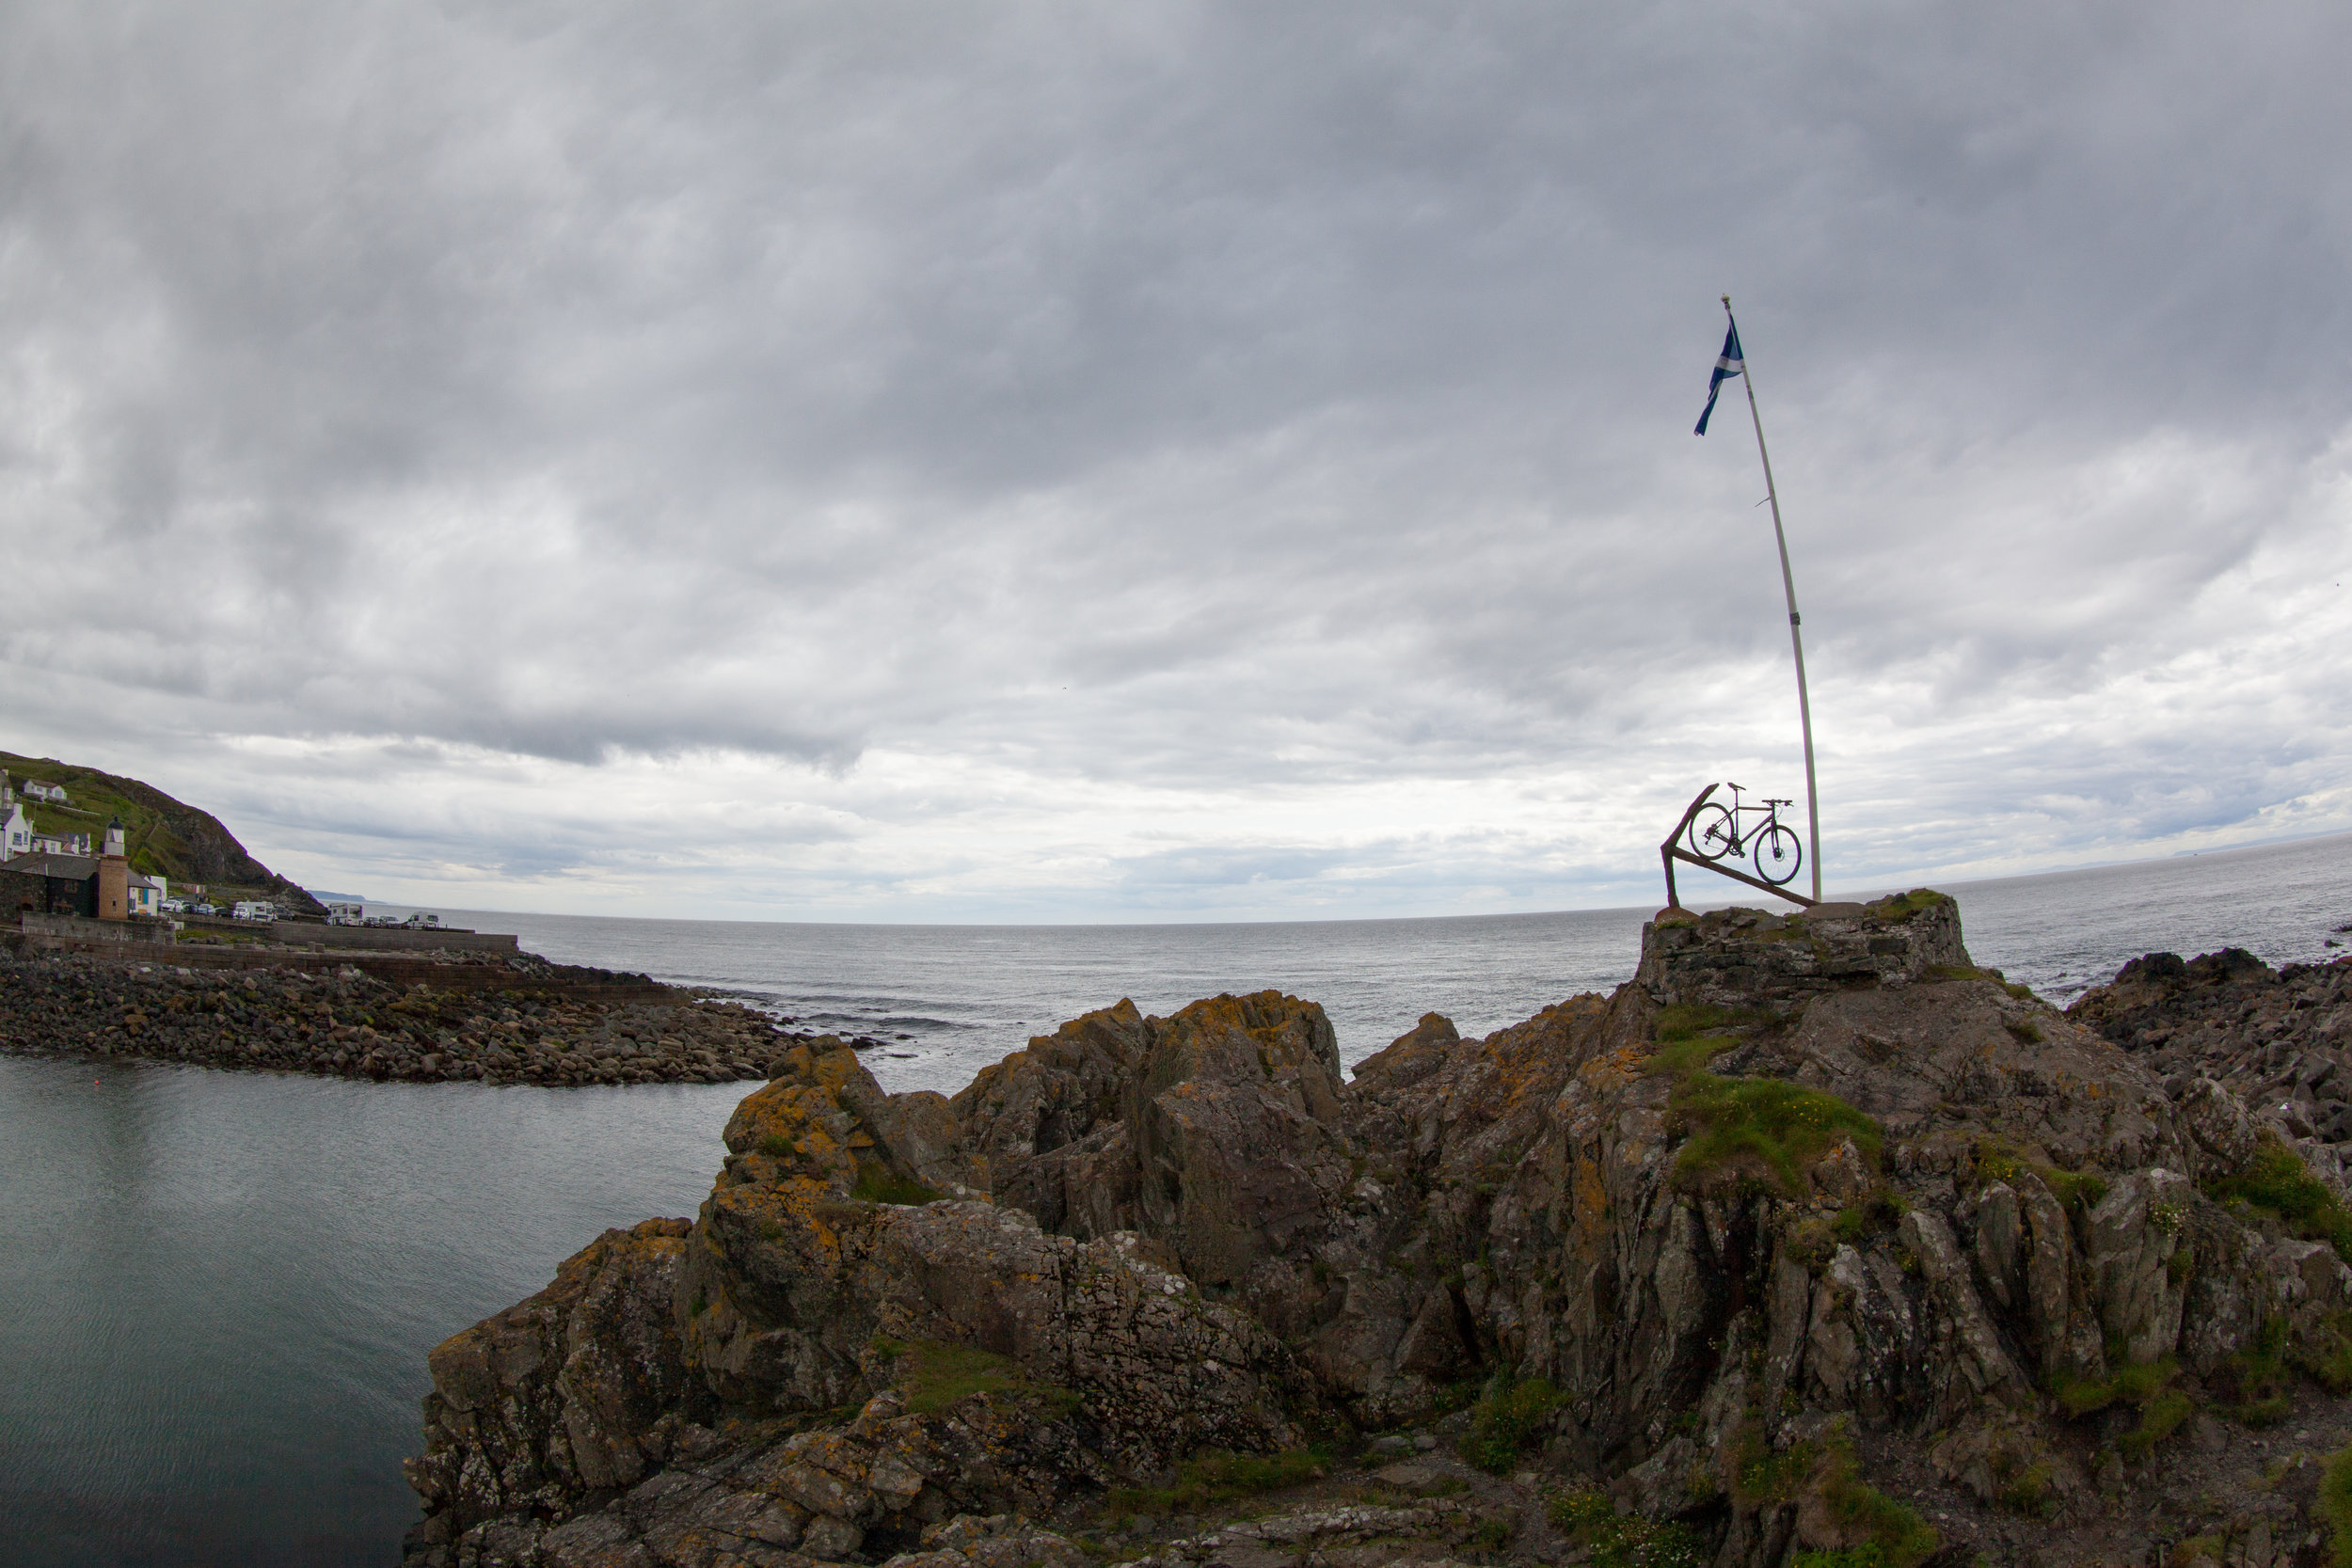 A rocky outcrop on the coastline of Scotland.